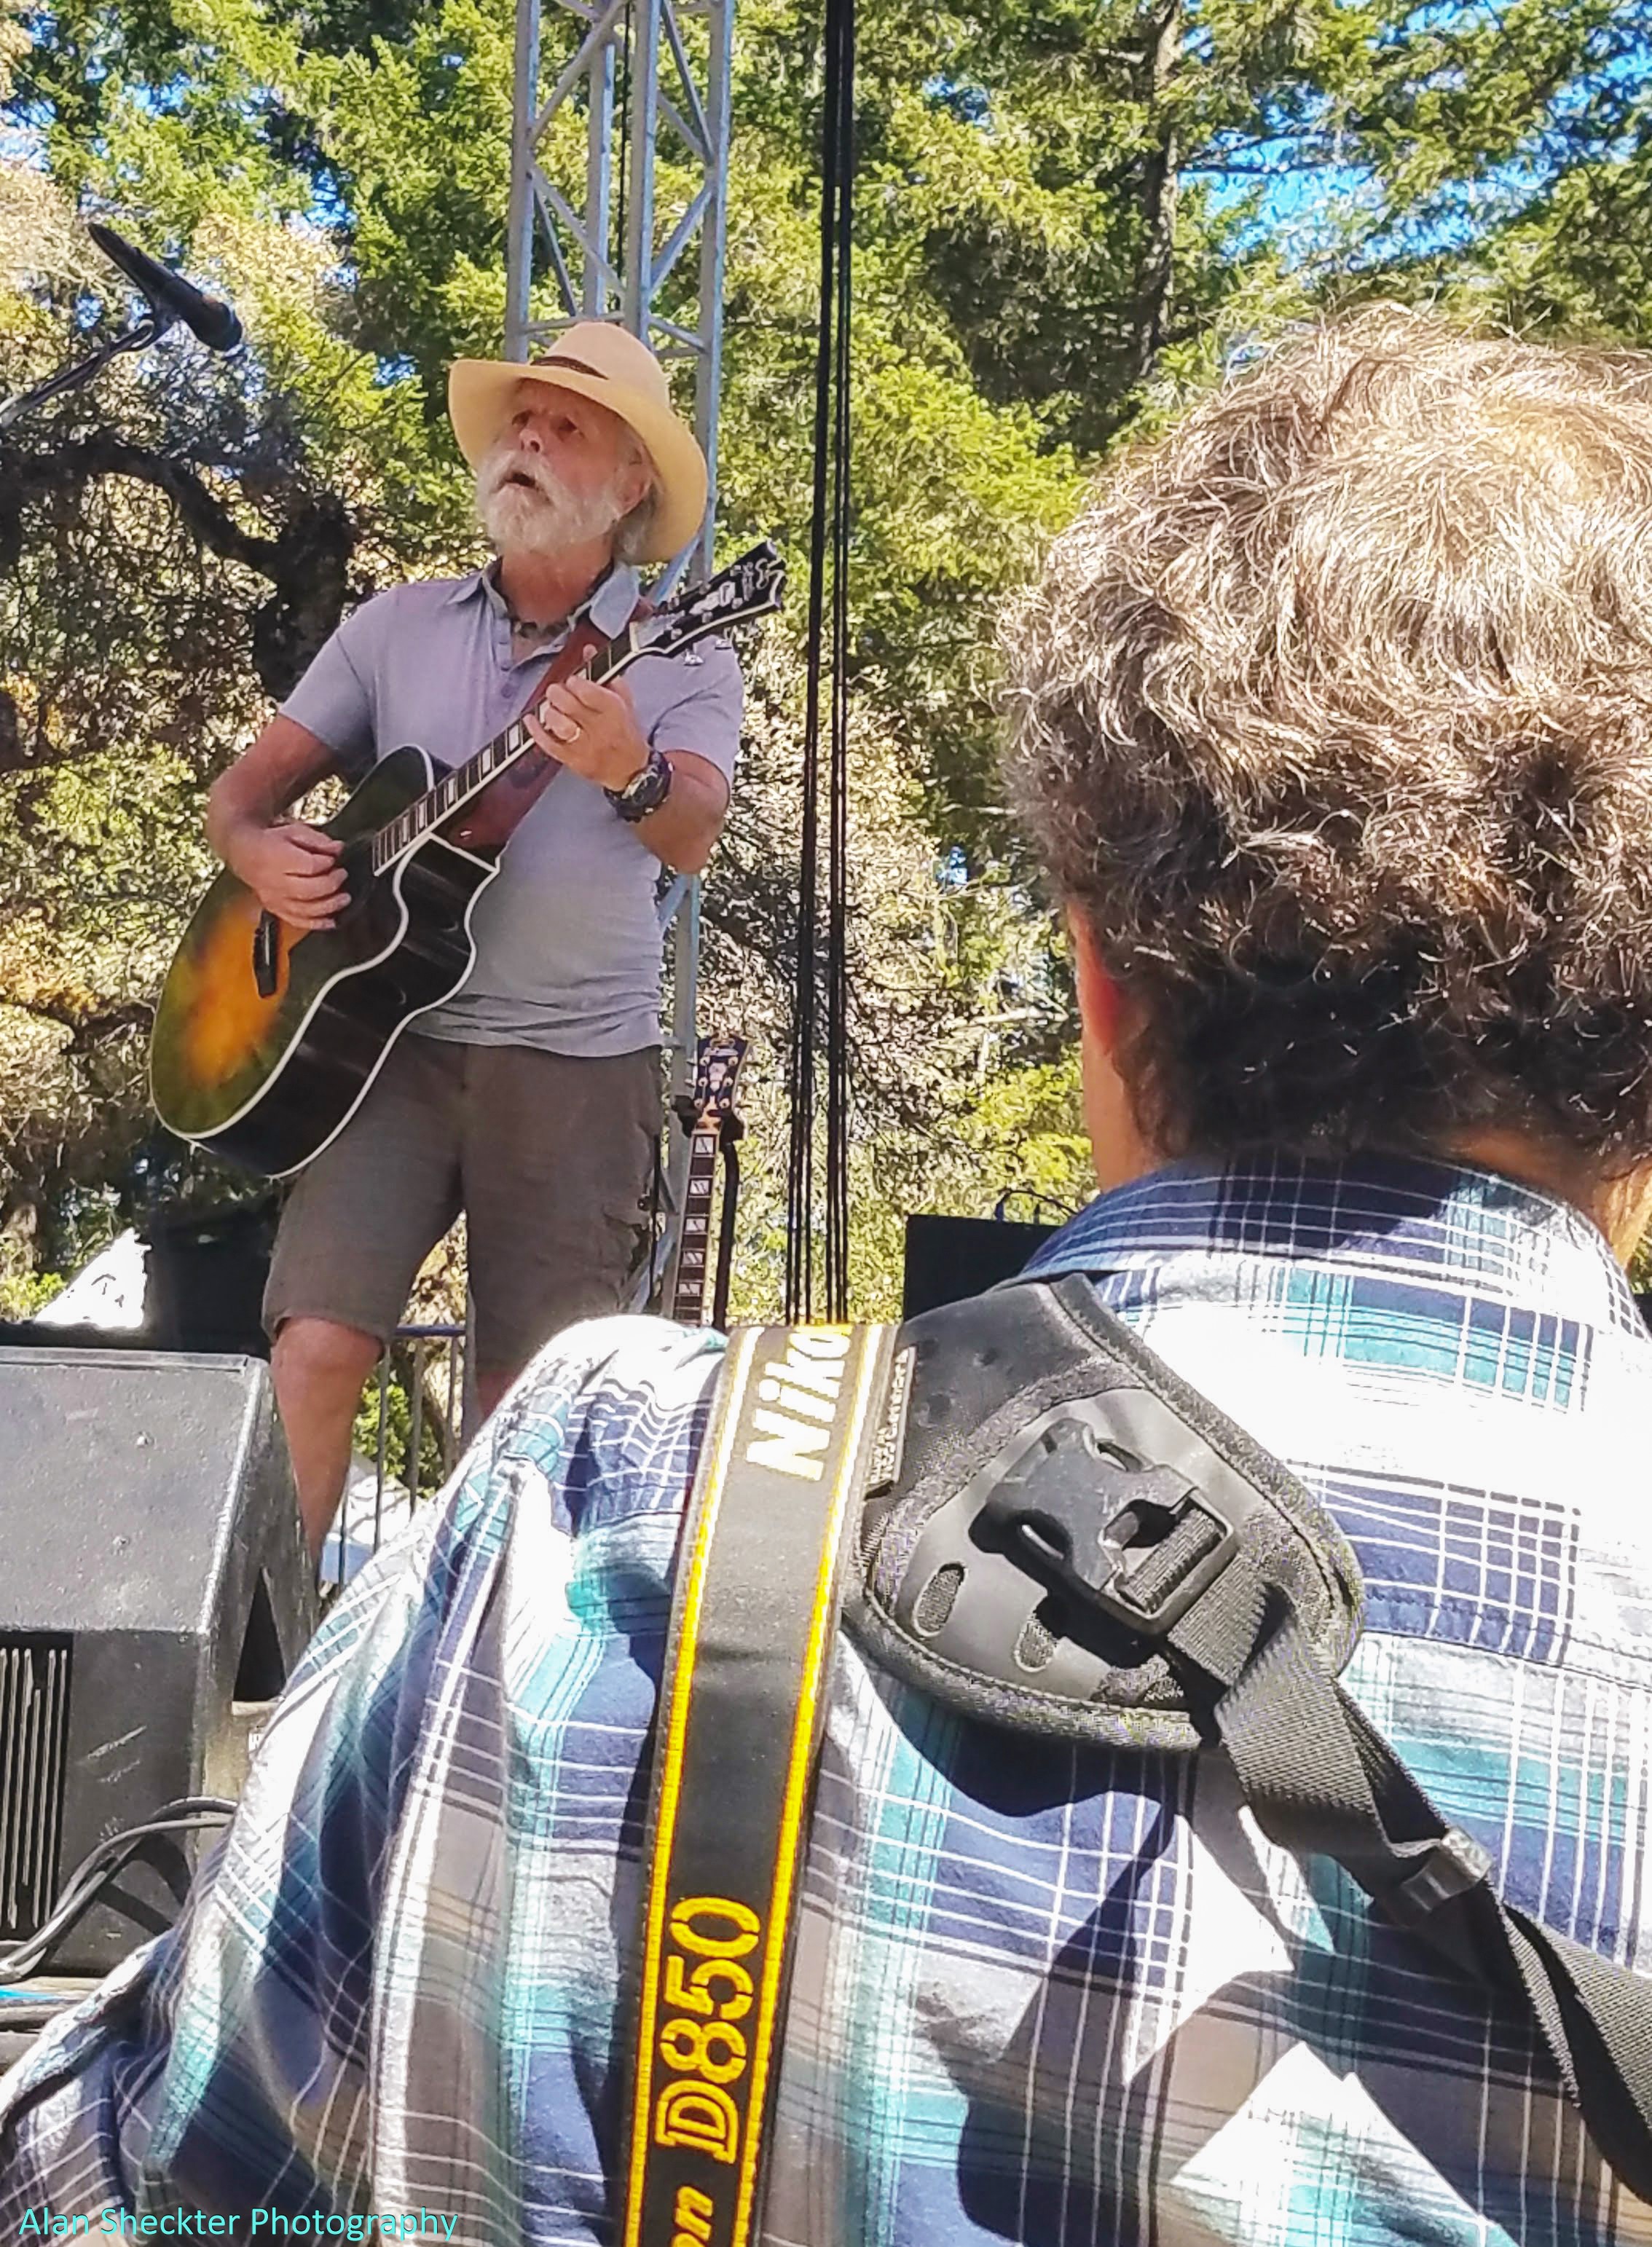 Bobby - and Bob Minkin, Sept. 8, 2018 at Sound Summit, Mt. Tamalpais, Marin County, Calif. - photo by Alan Sheckter